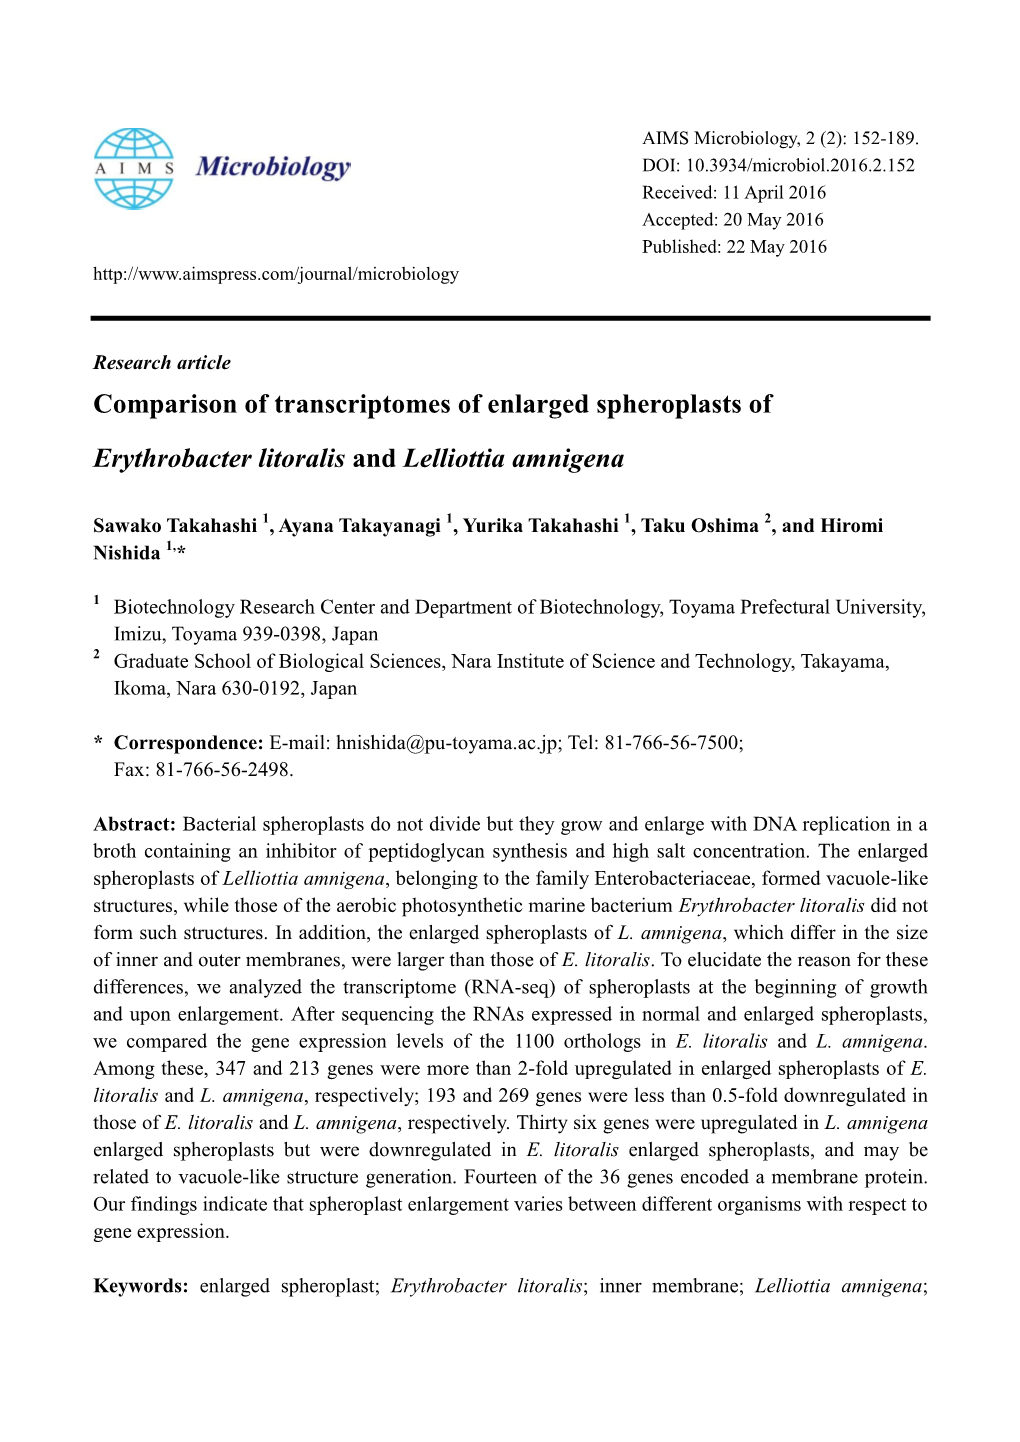 Comparison of Transcriptomes of Enlarged Spheroplasts of Erythrobacter Litoralis and Lelliottia Amnigena